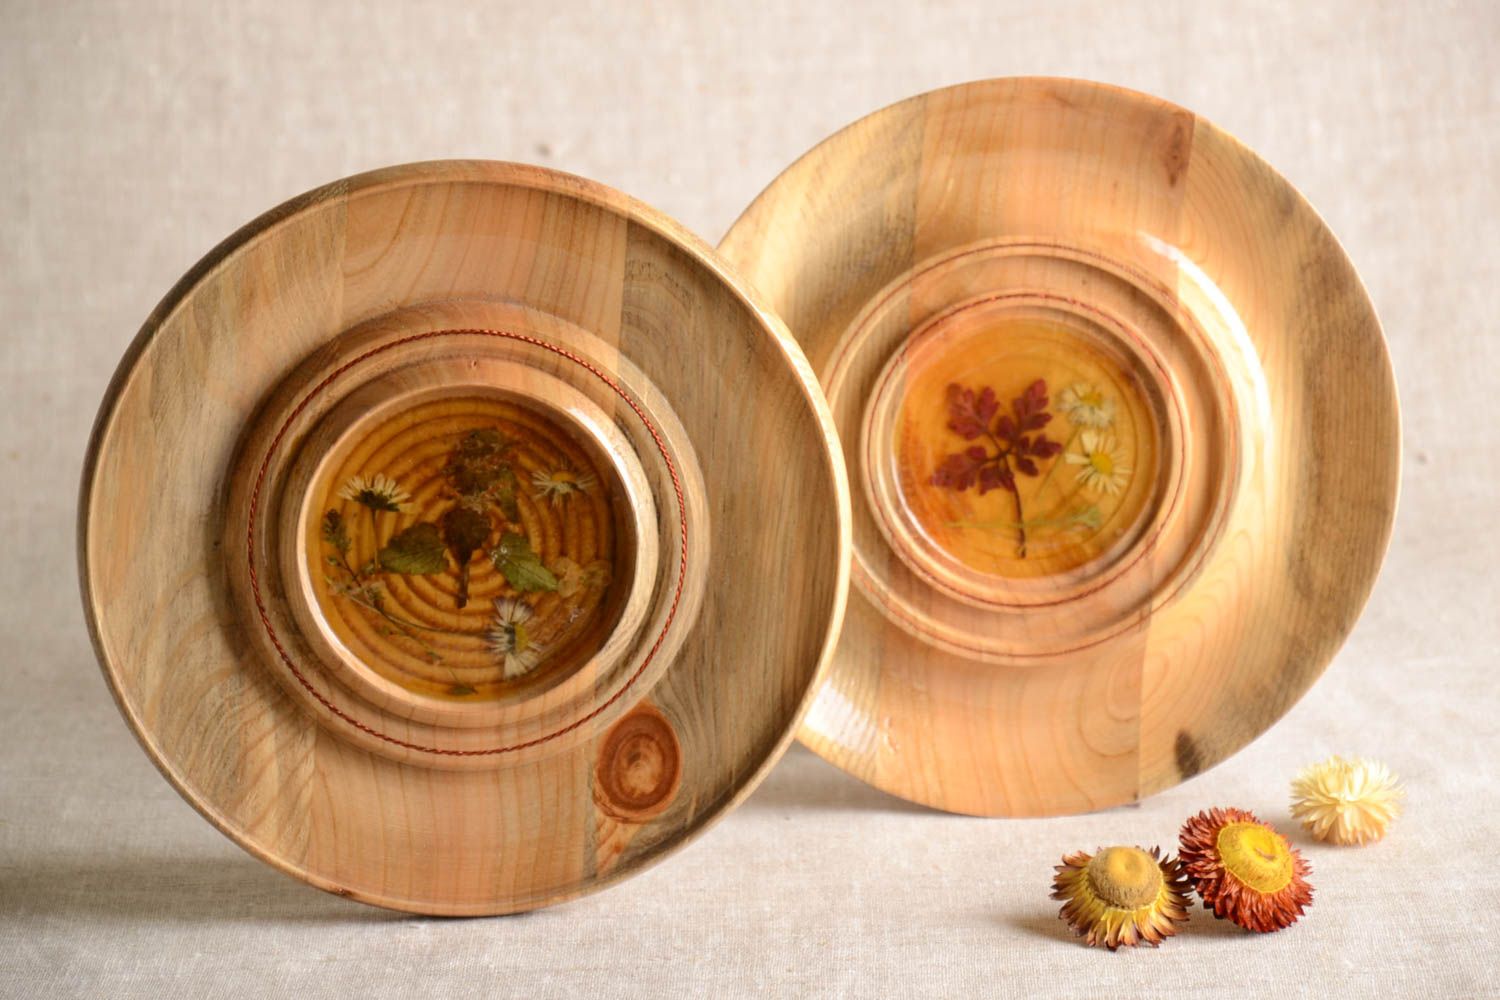 Handmade plate designer plate wooden plate wooden dishes kitchen decor photo 1